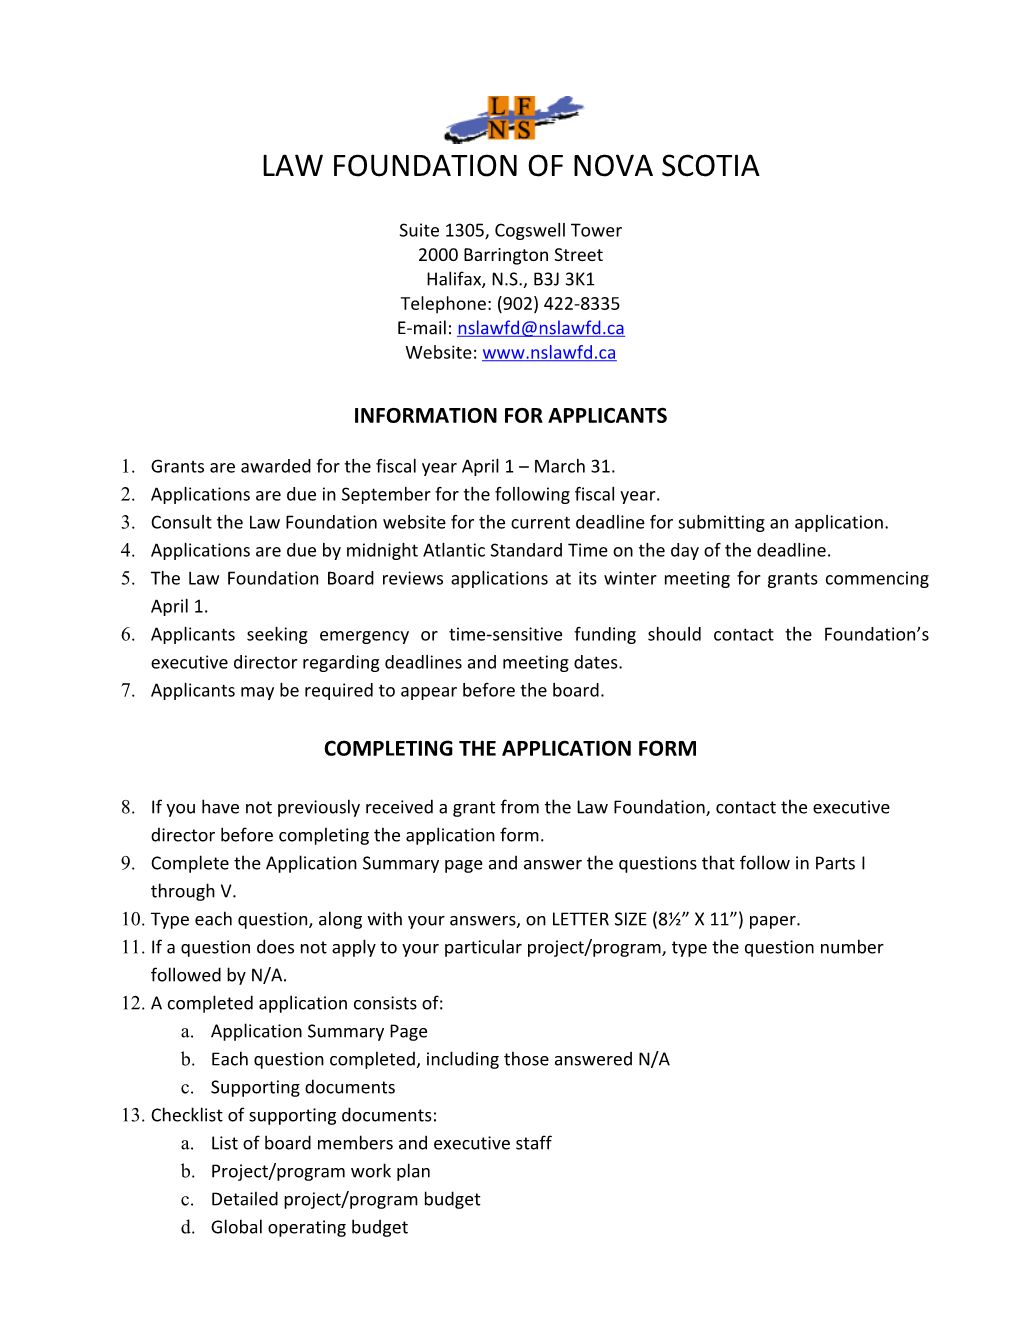 Law Foundation of Nova Scotia